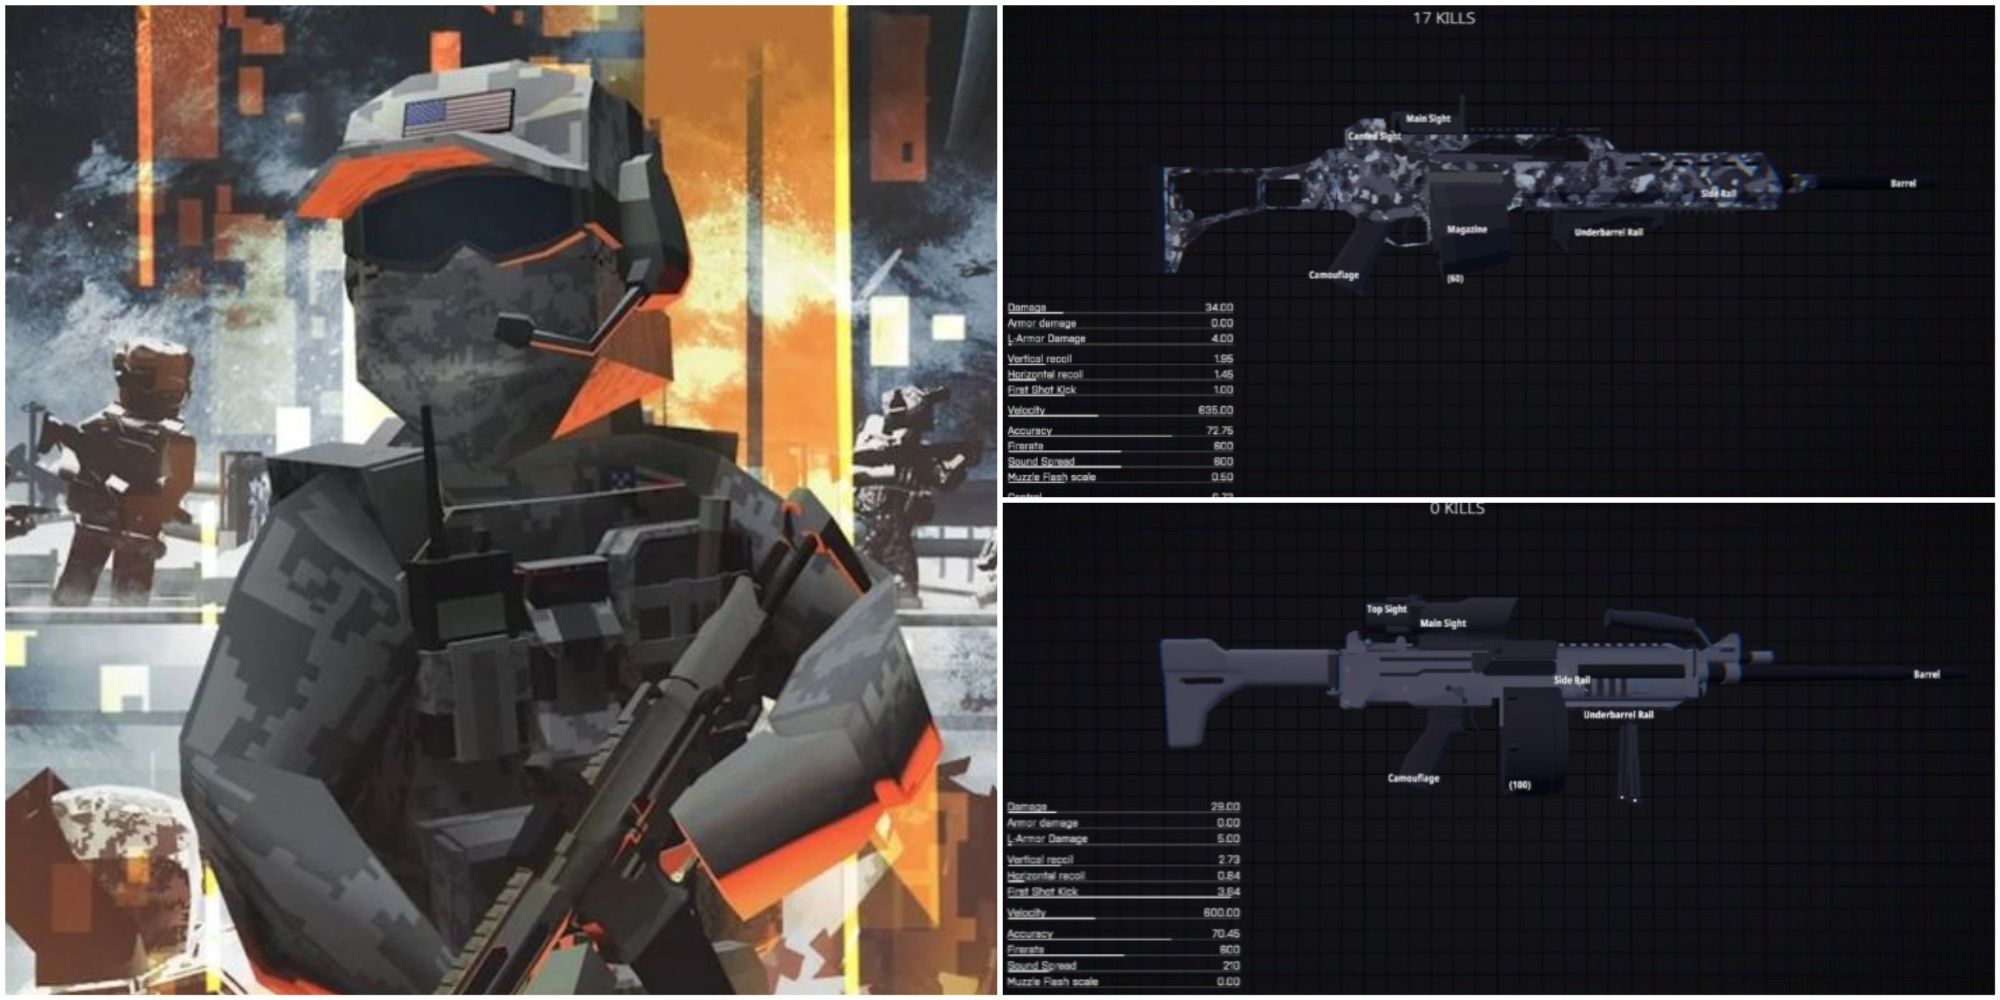 BattleBit Remastered splash promo art (left), MG36 light support gun (top right), Ultimax100 LMG (bottom right)